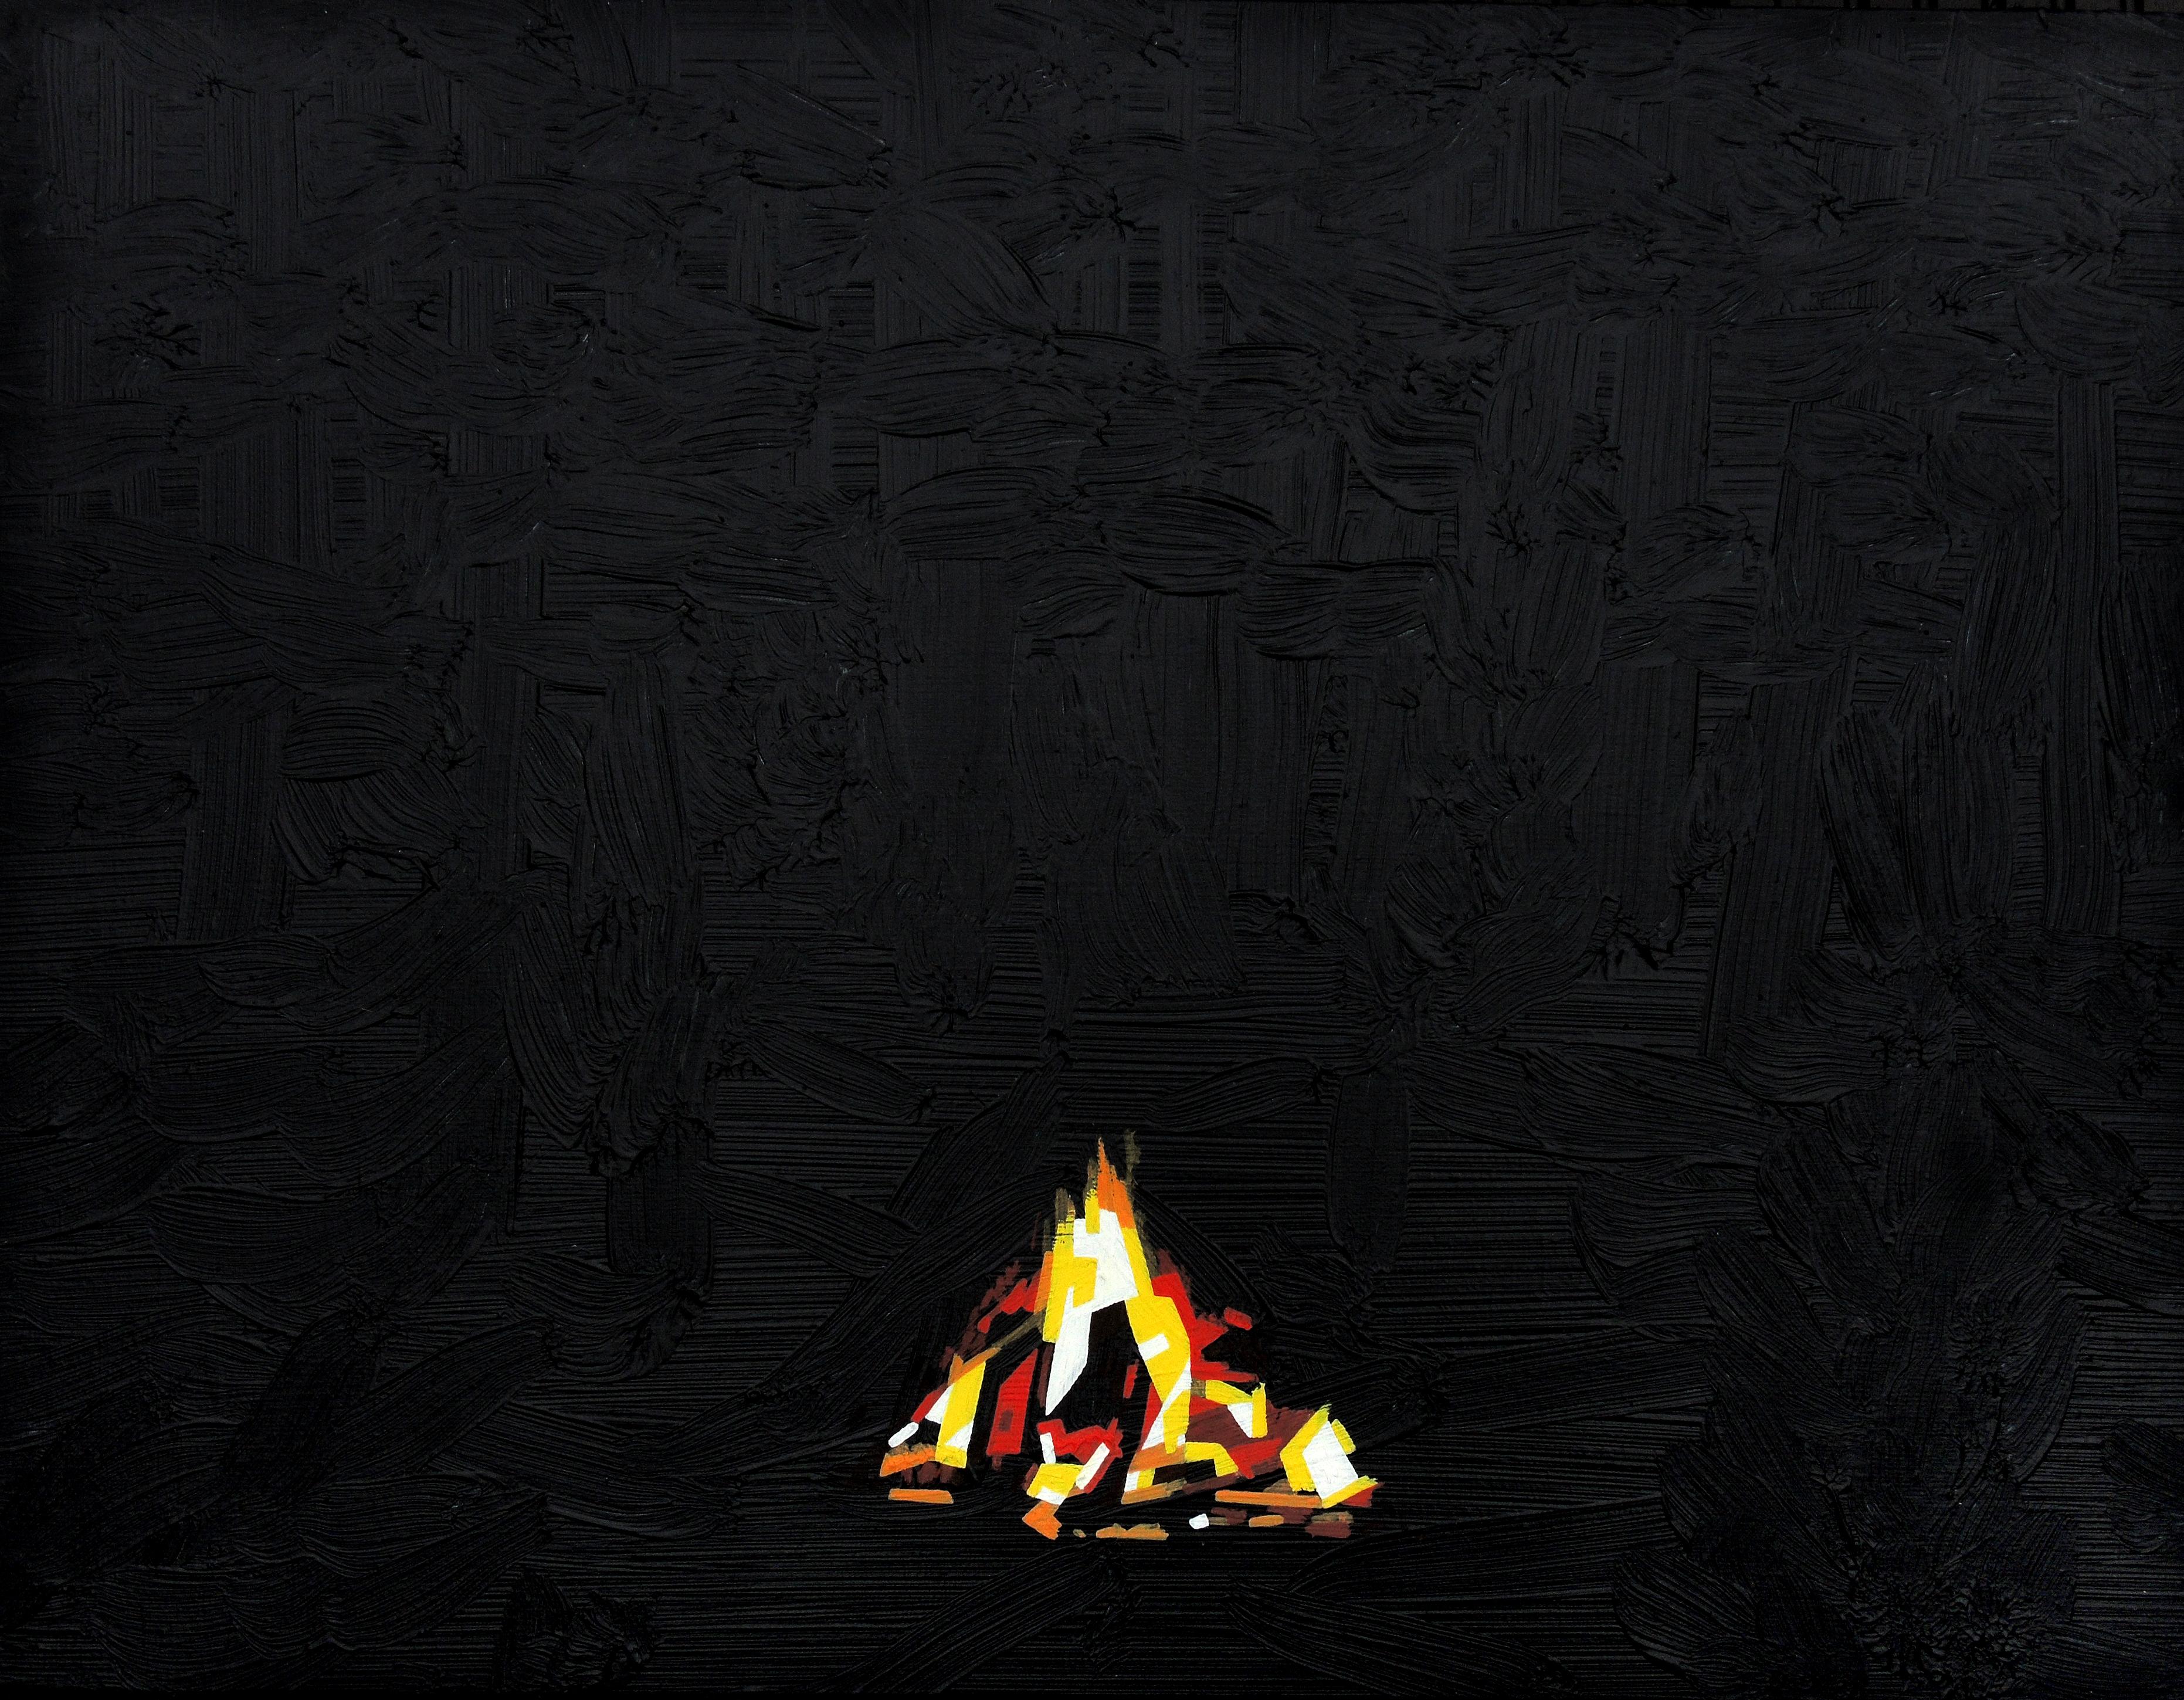 Robert Motelski Landscape Painting - Campfire 28 May 22:53